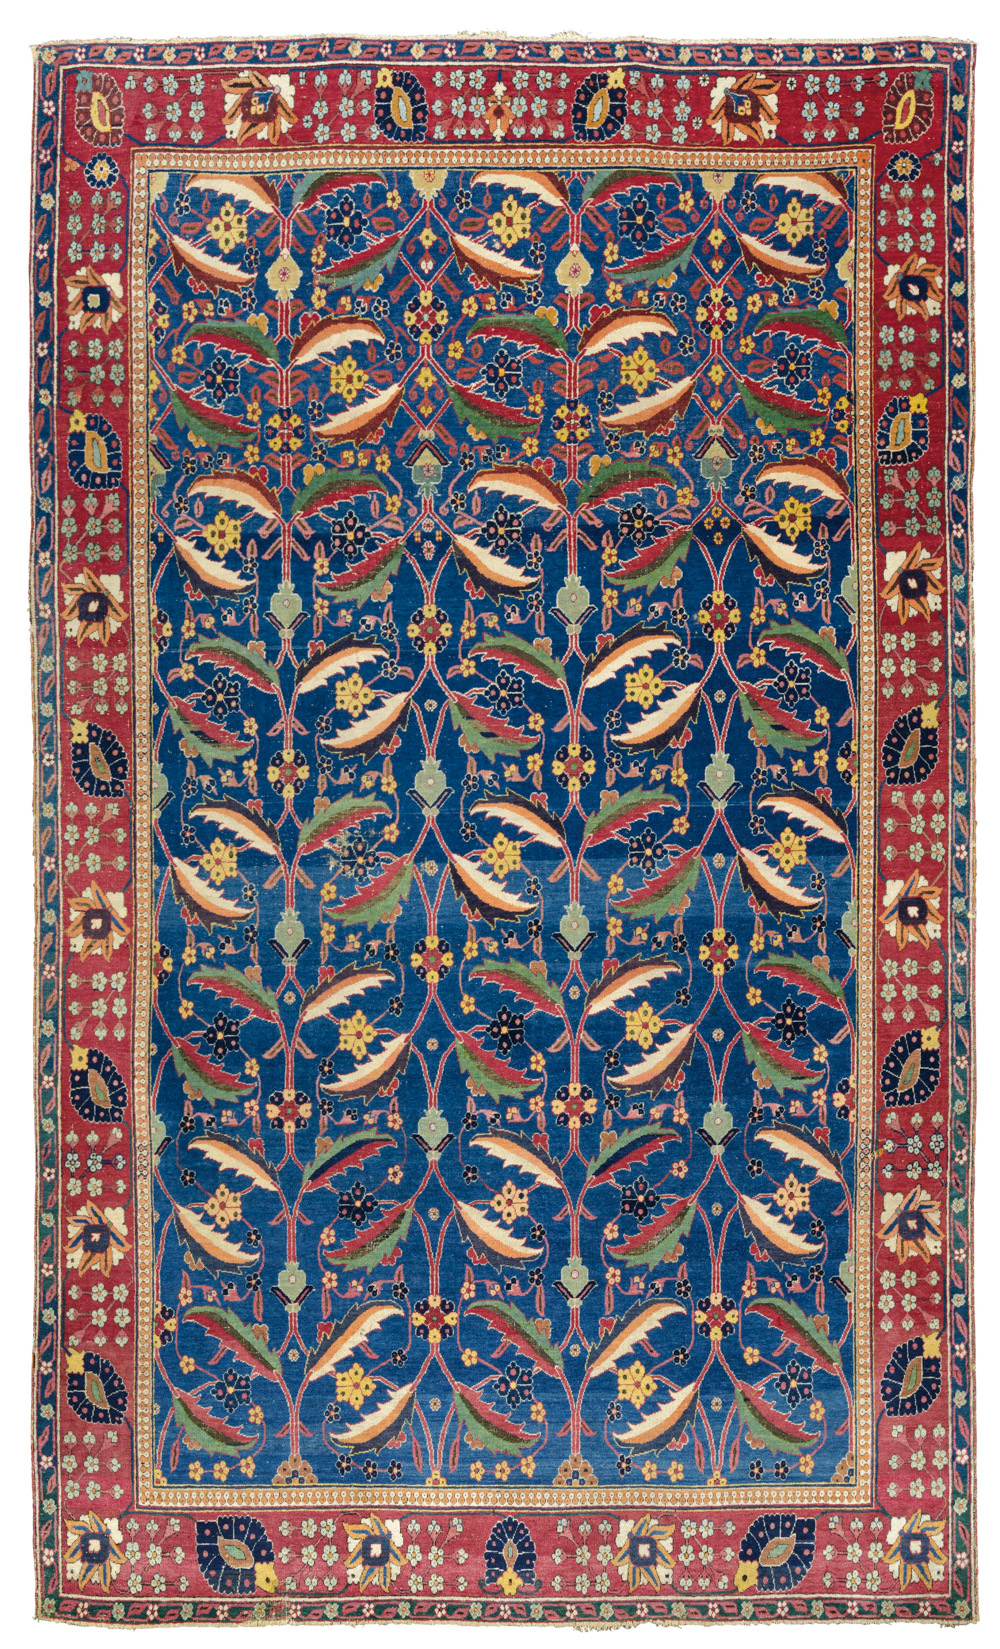 Kerman 'vase' carpet, southeast Persia, late 17th century. 1.51 x 2.51m (5’0” x 8’3”). £1,000,000-1,500,000